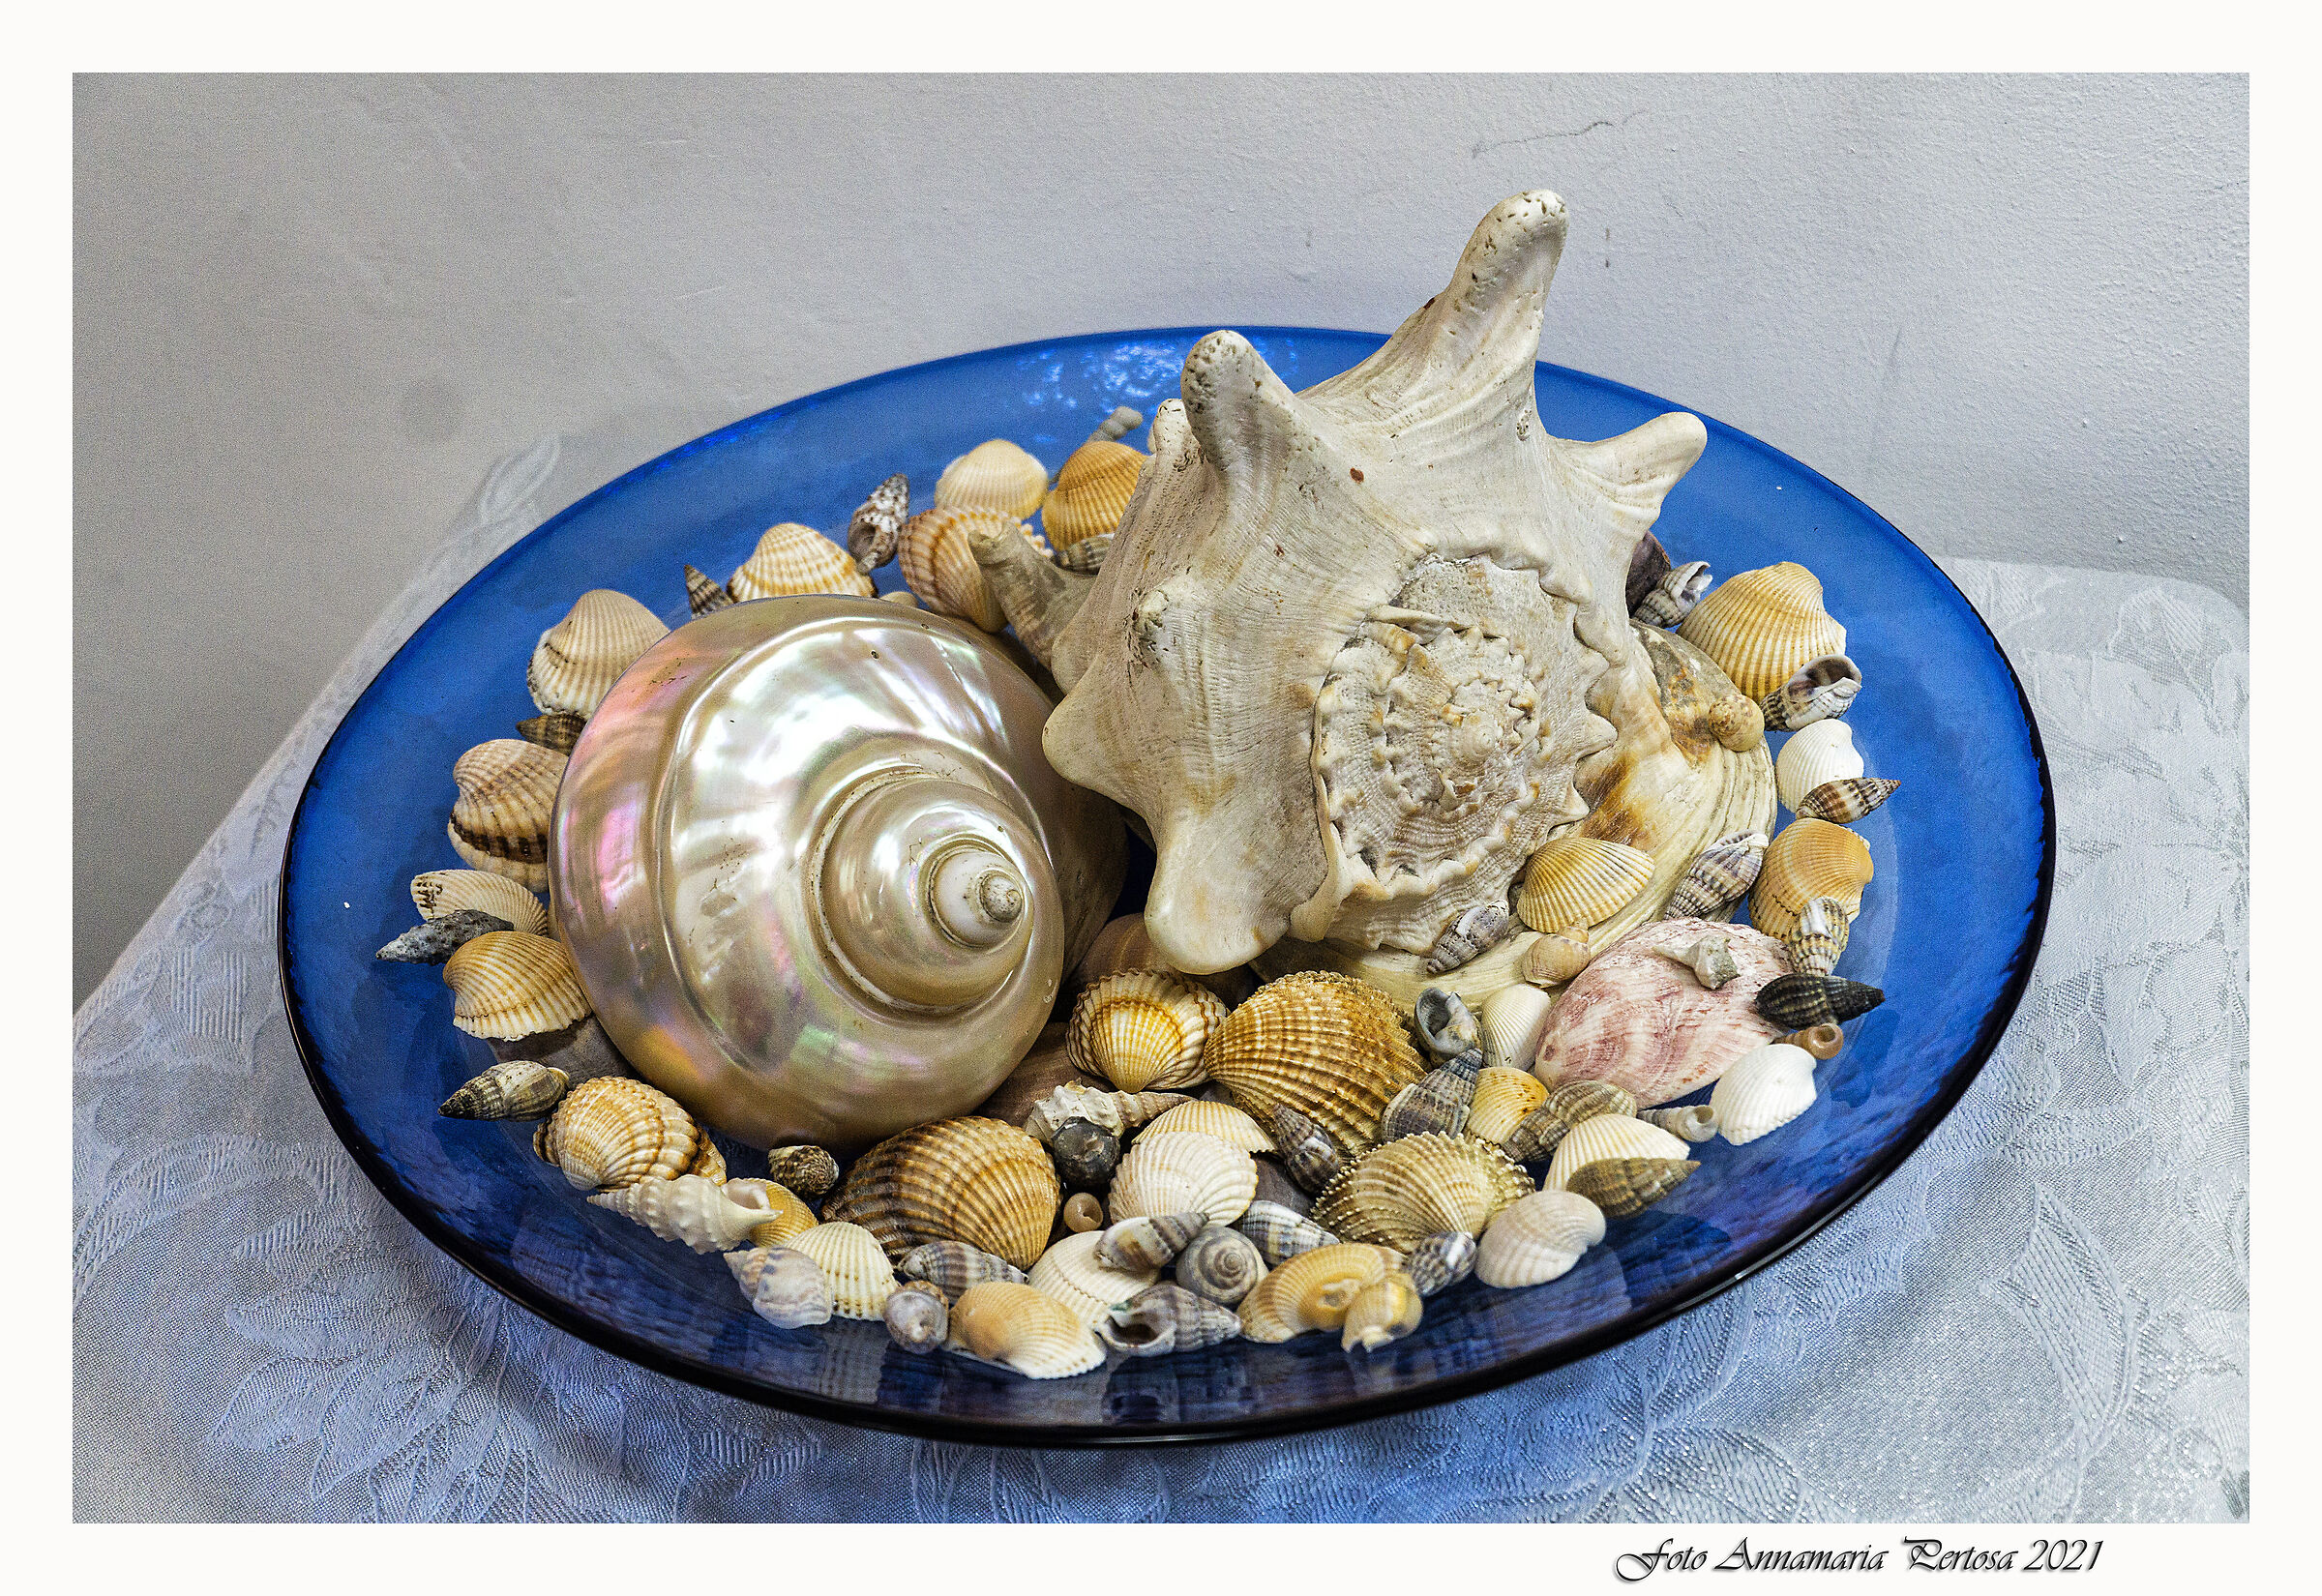 My shells, my sea...